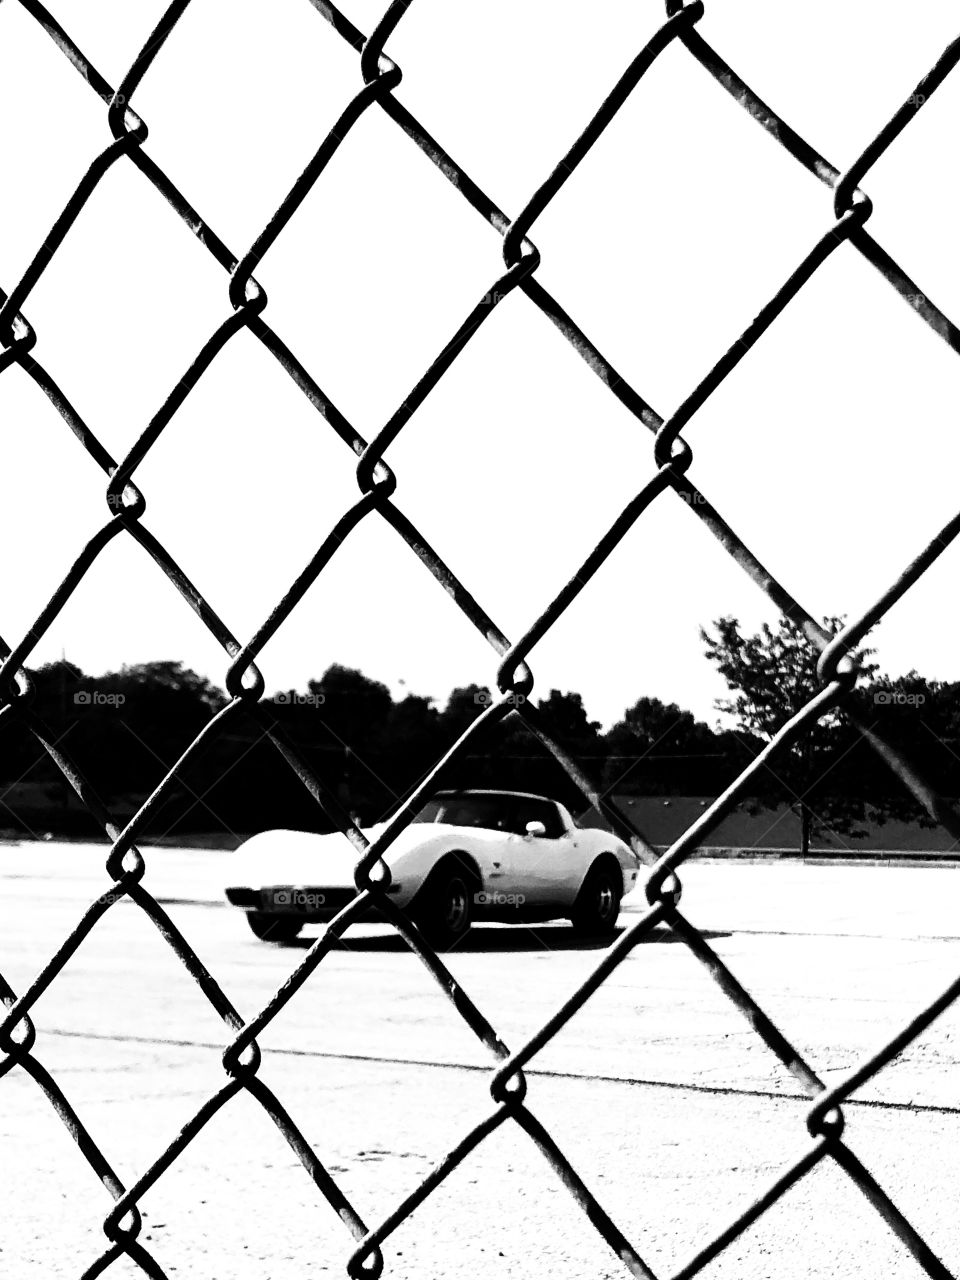 Corvette through a chain link fence. 